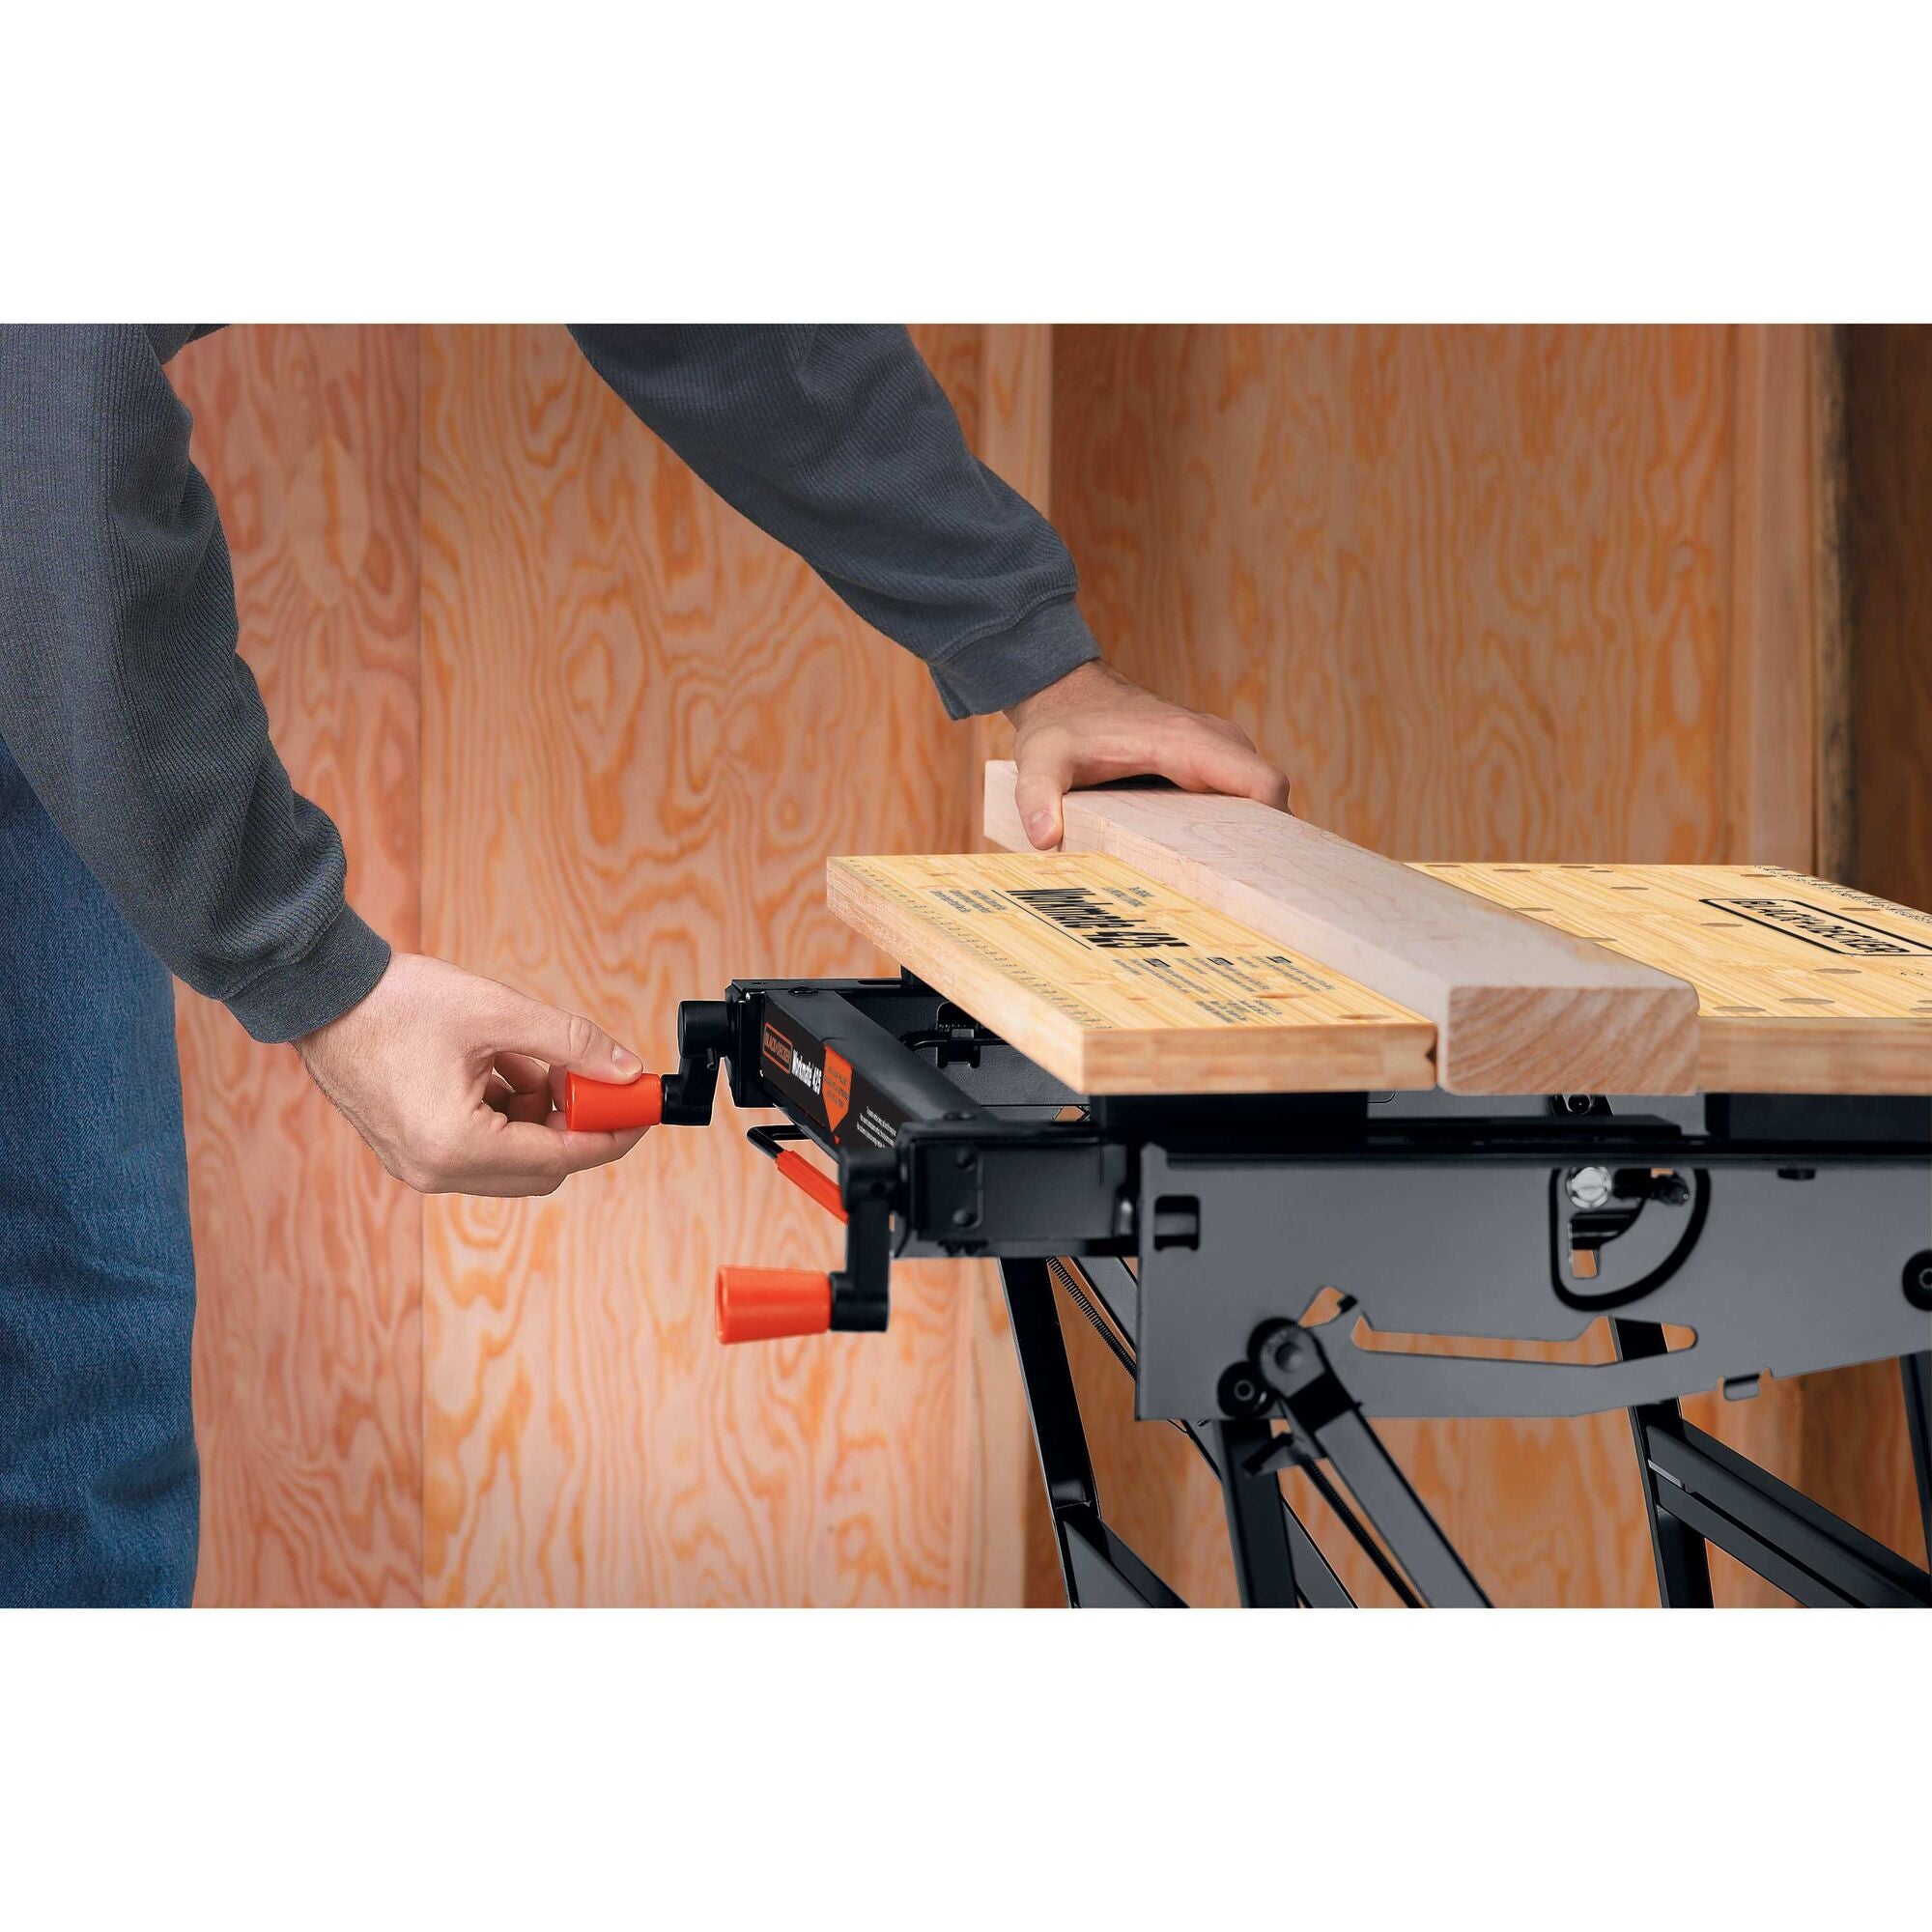 Workmate™ Portable Workbench, 350-Pound Capacity | BLACK+DECKER